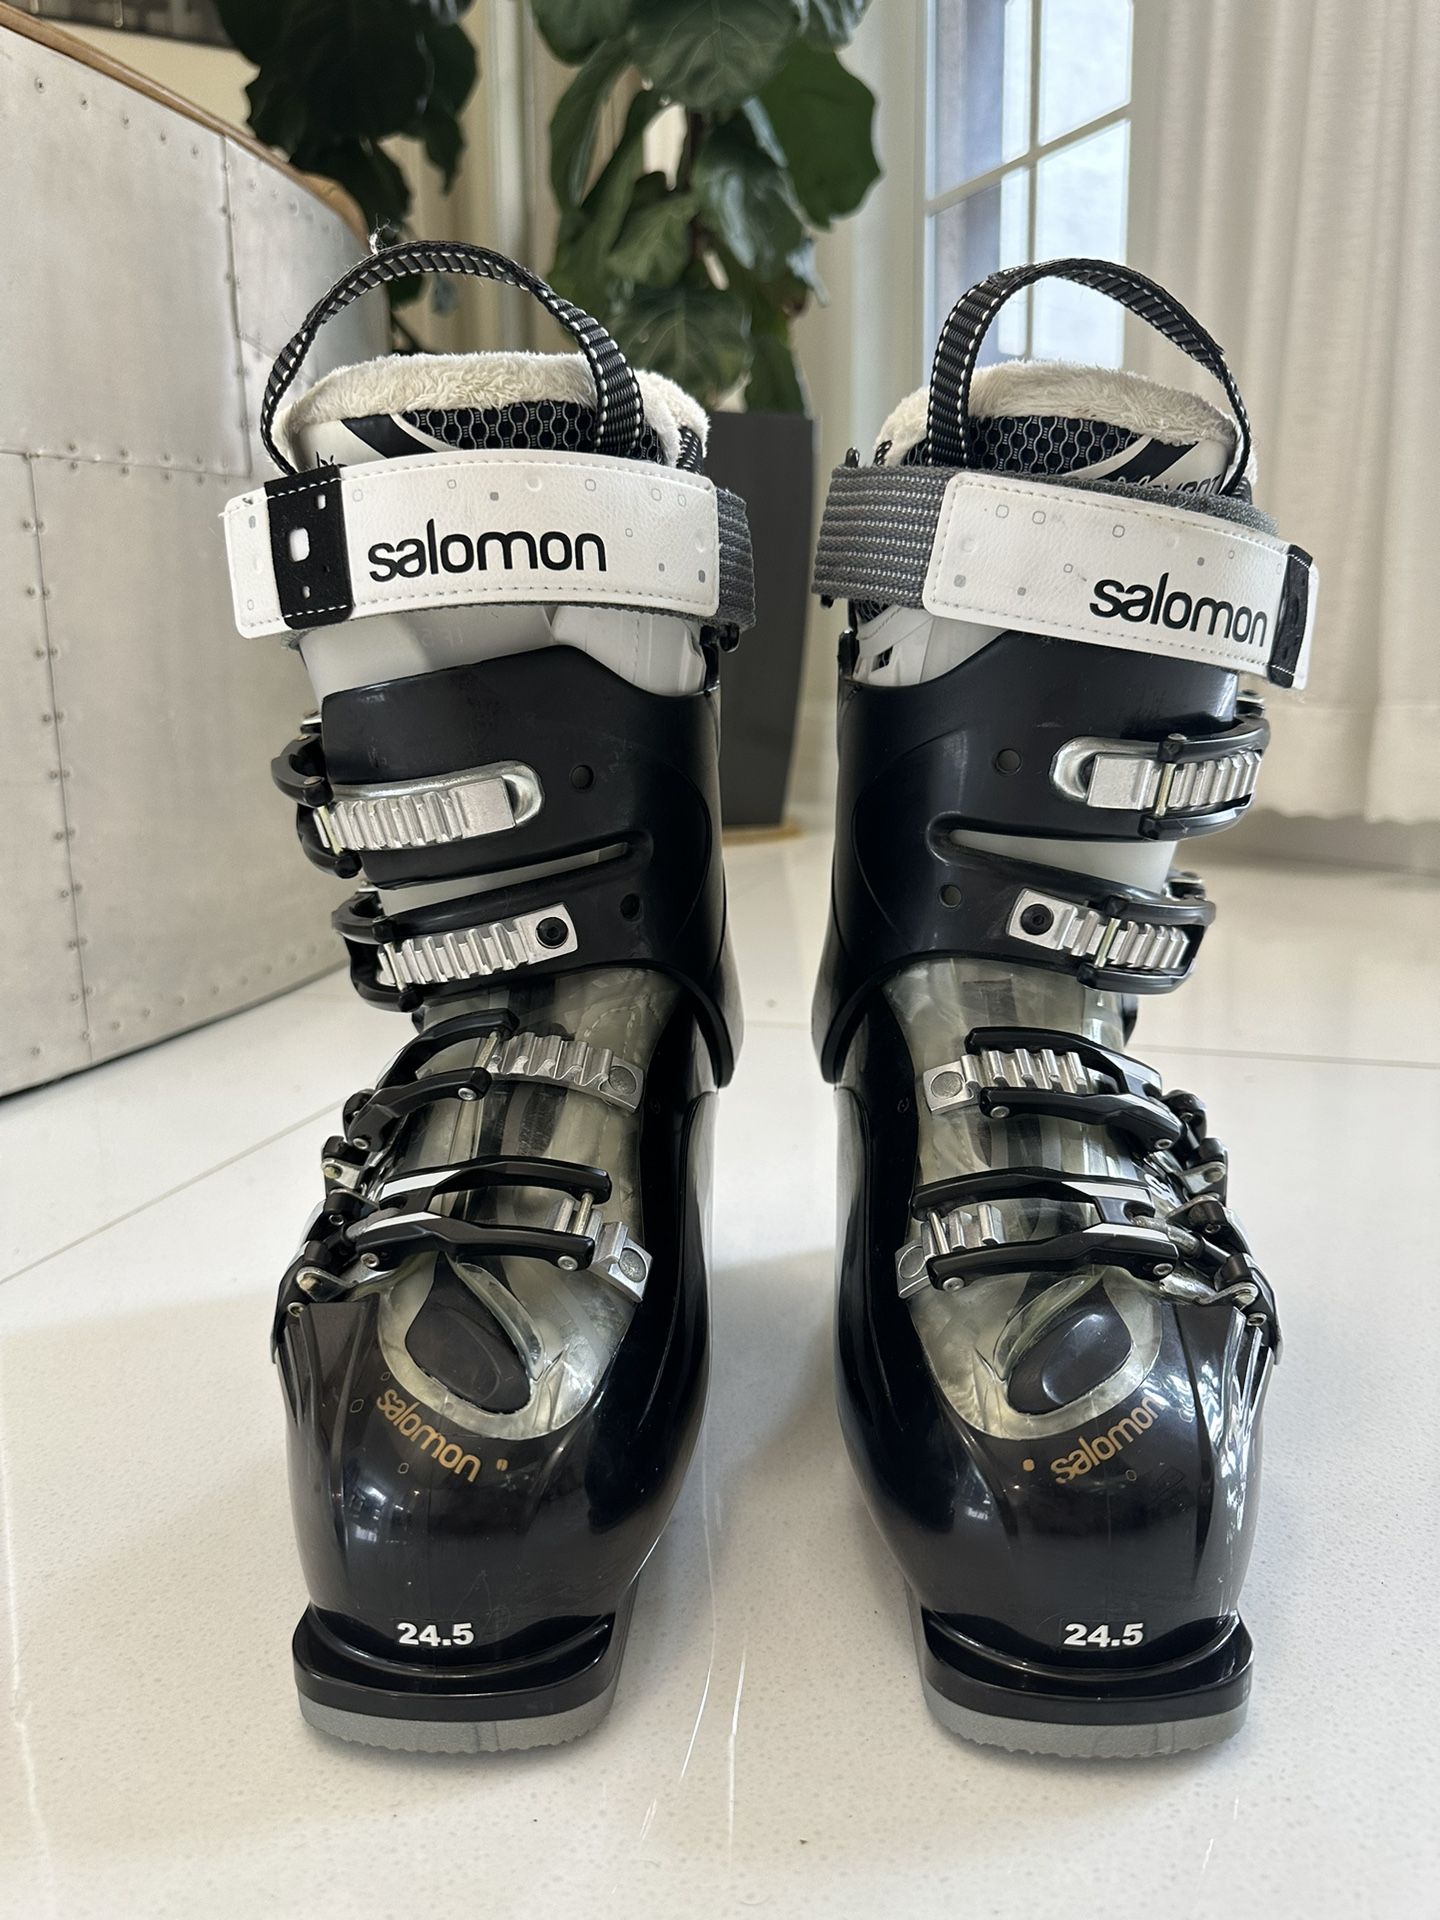 Salomon Ski Boots Size 24.5